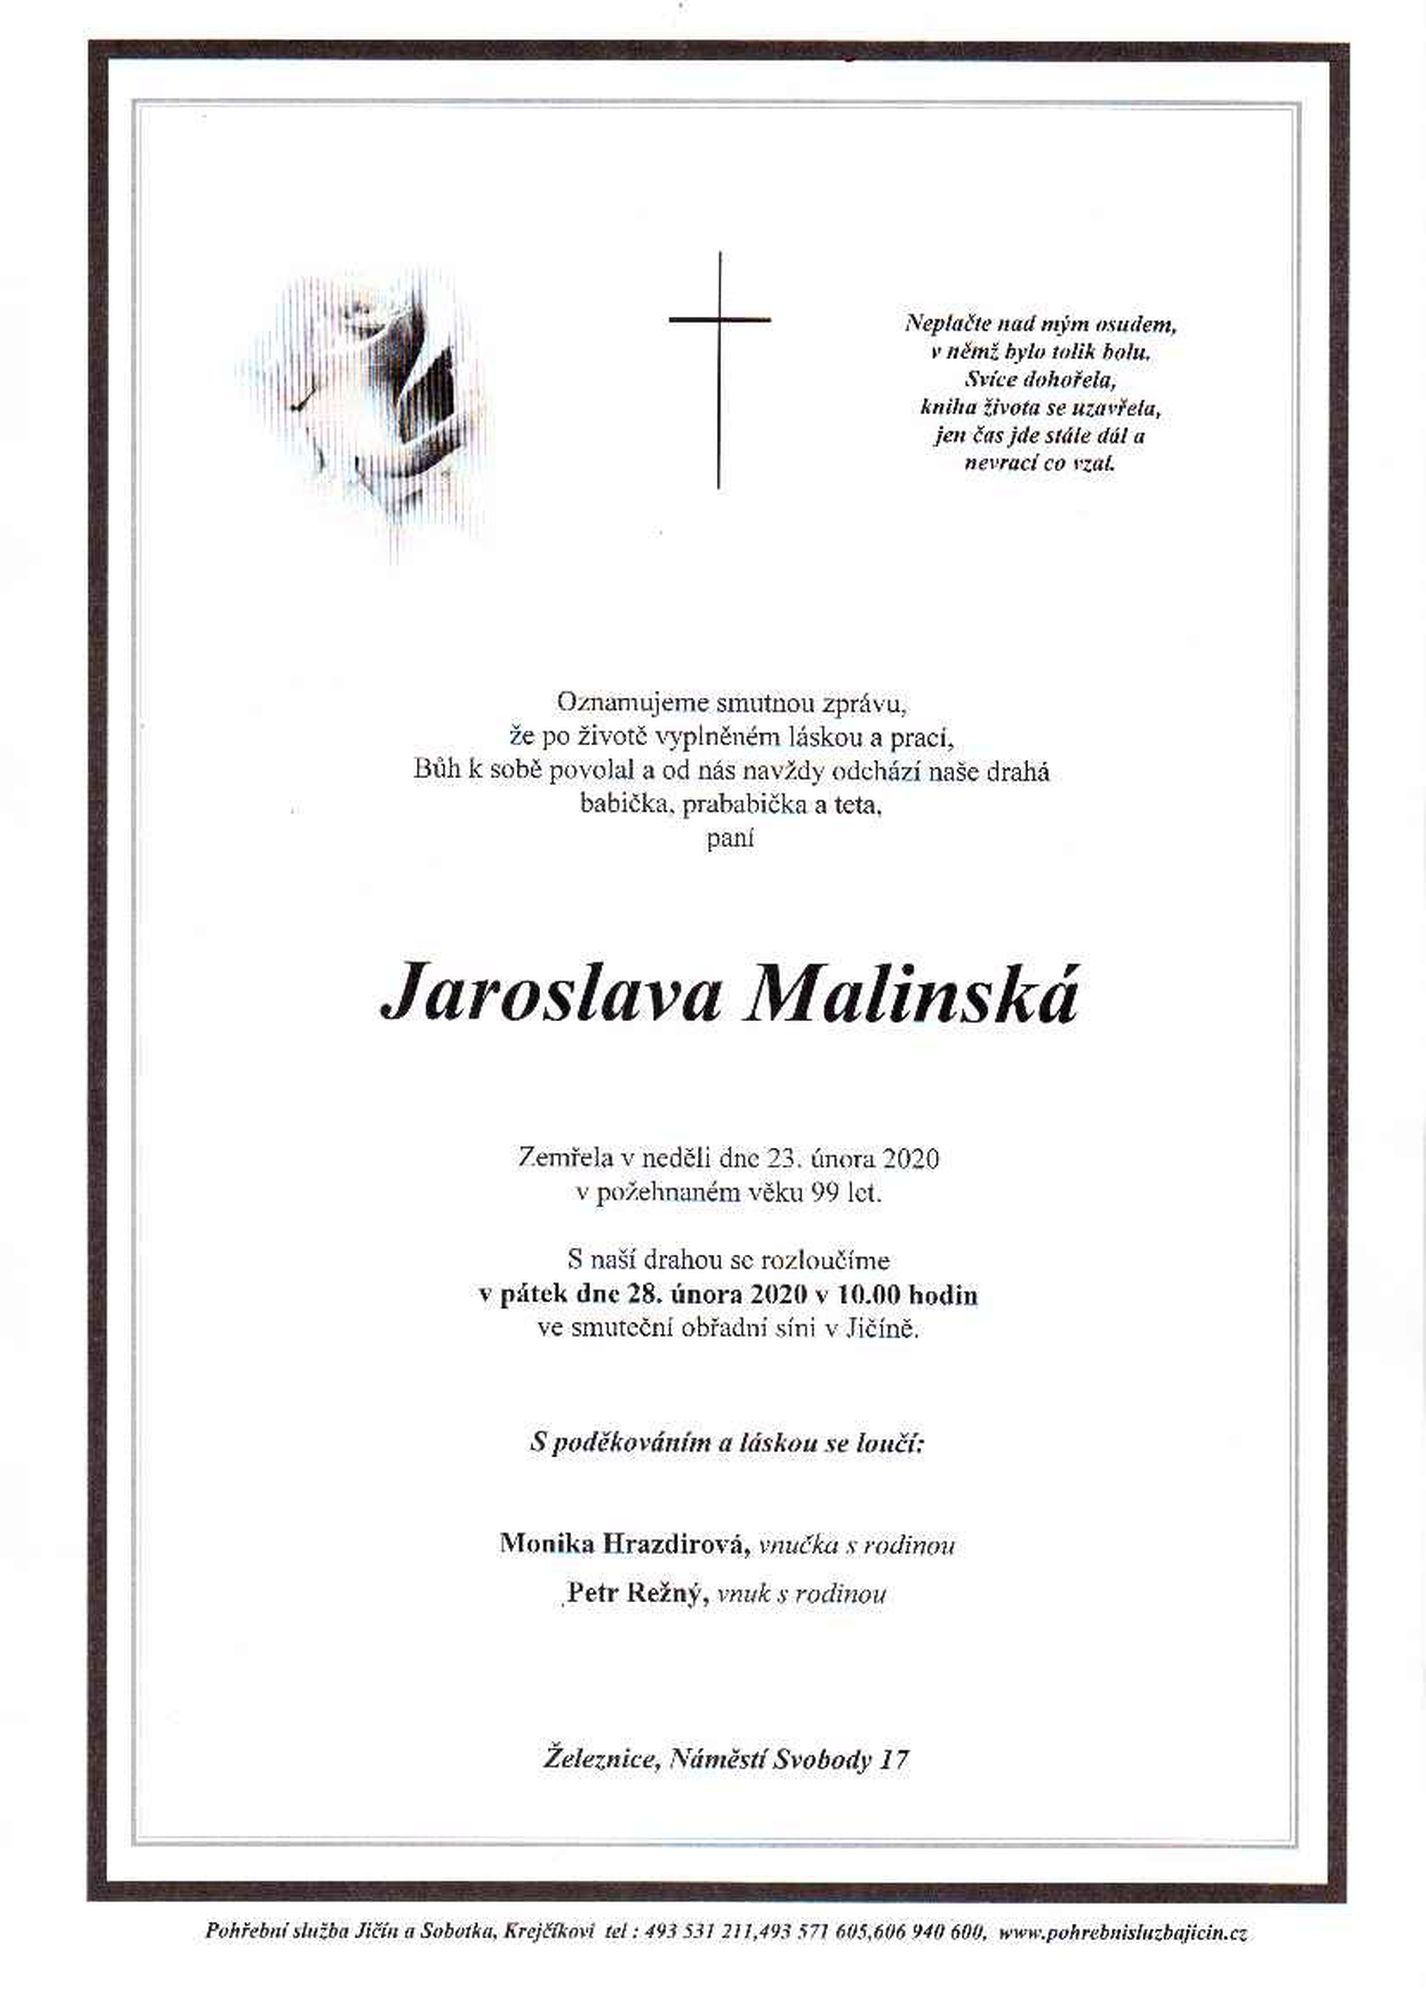 Jaroslava Malinská